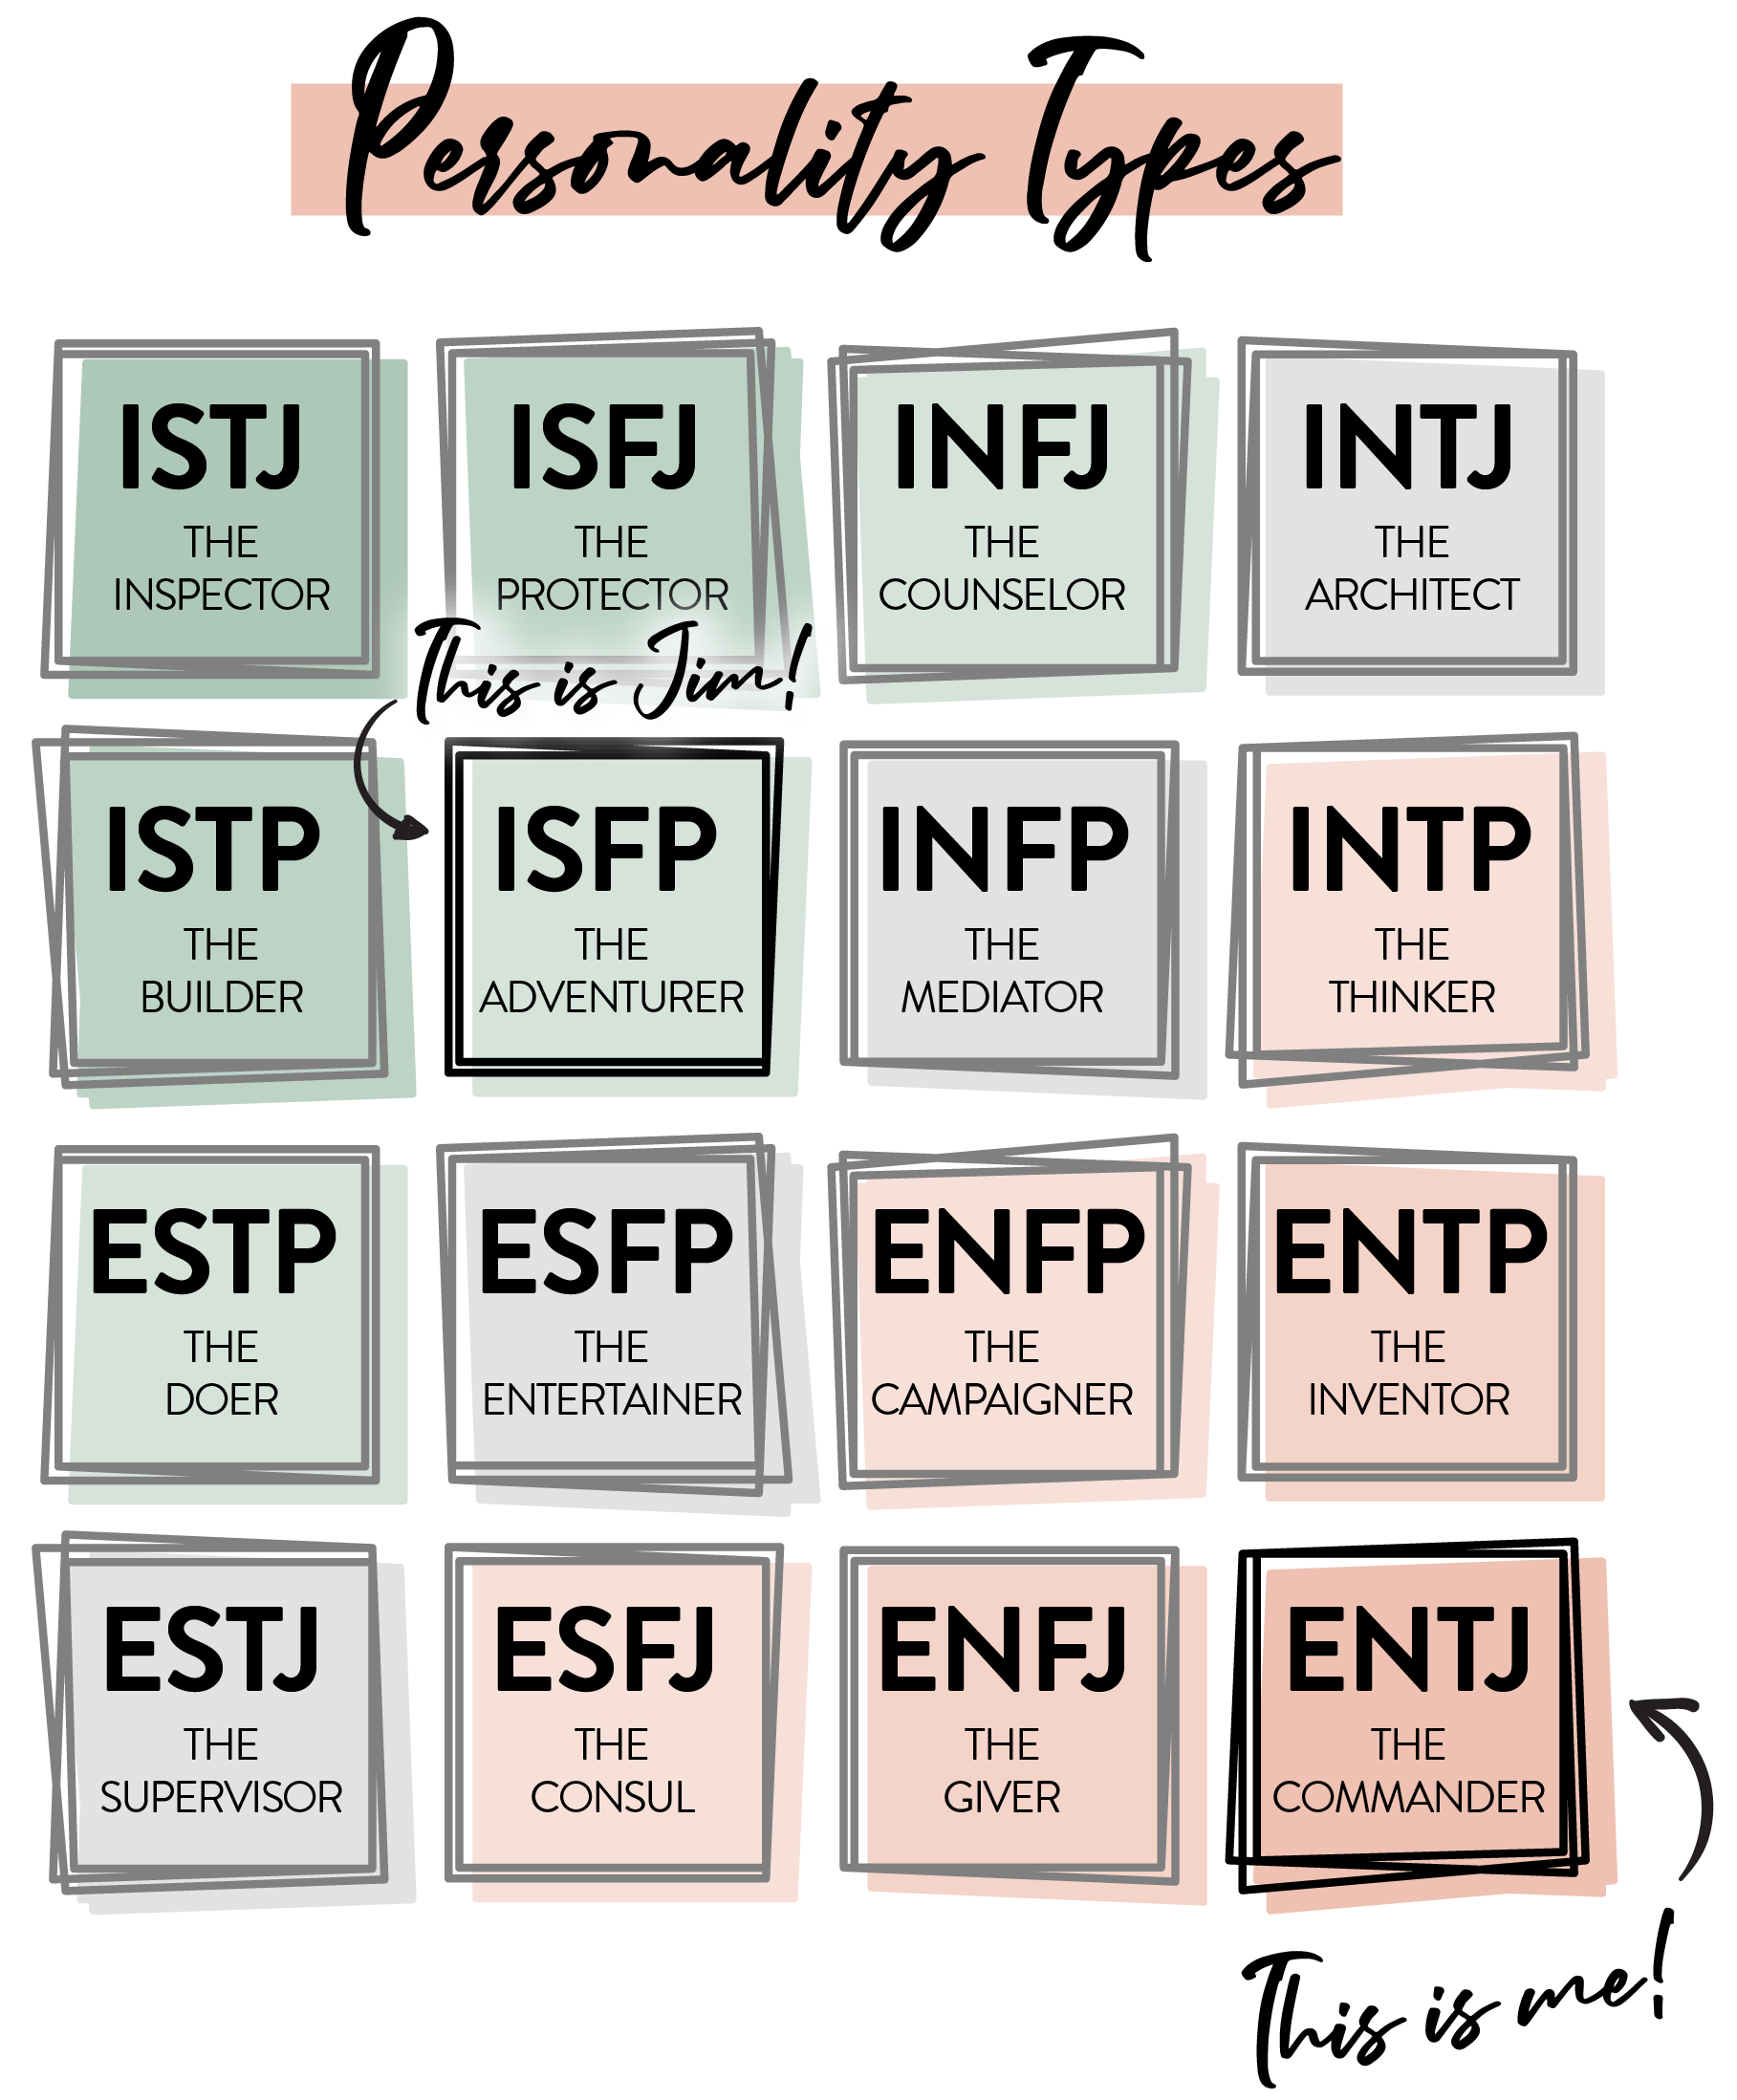 Jim MBTI Personality Type: ESFP or ESFJ?